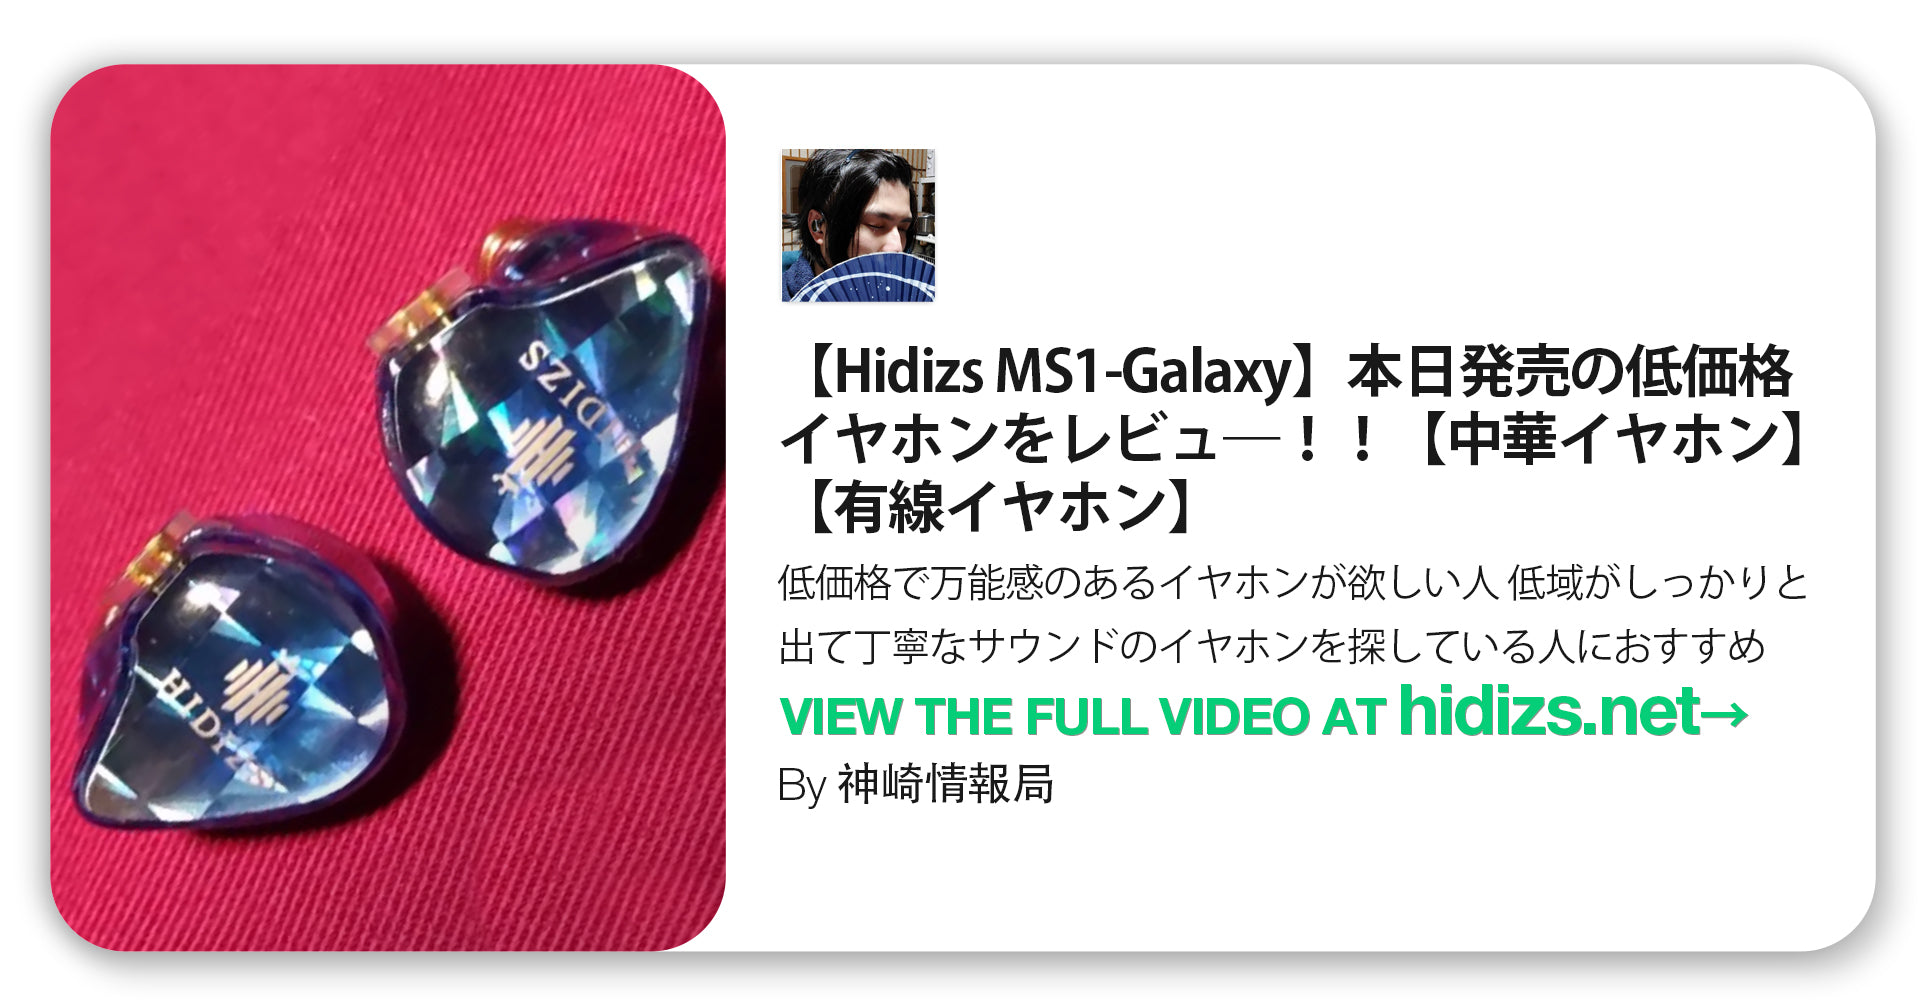 Hidizs MS1-Galaxy Review - 神崎情報局